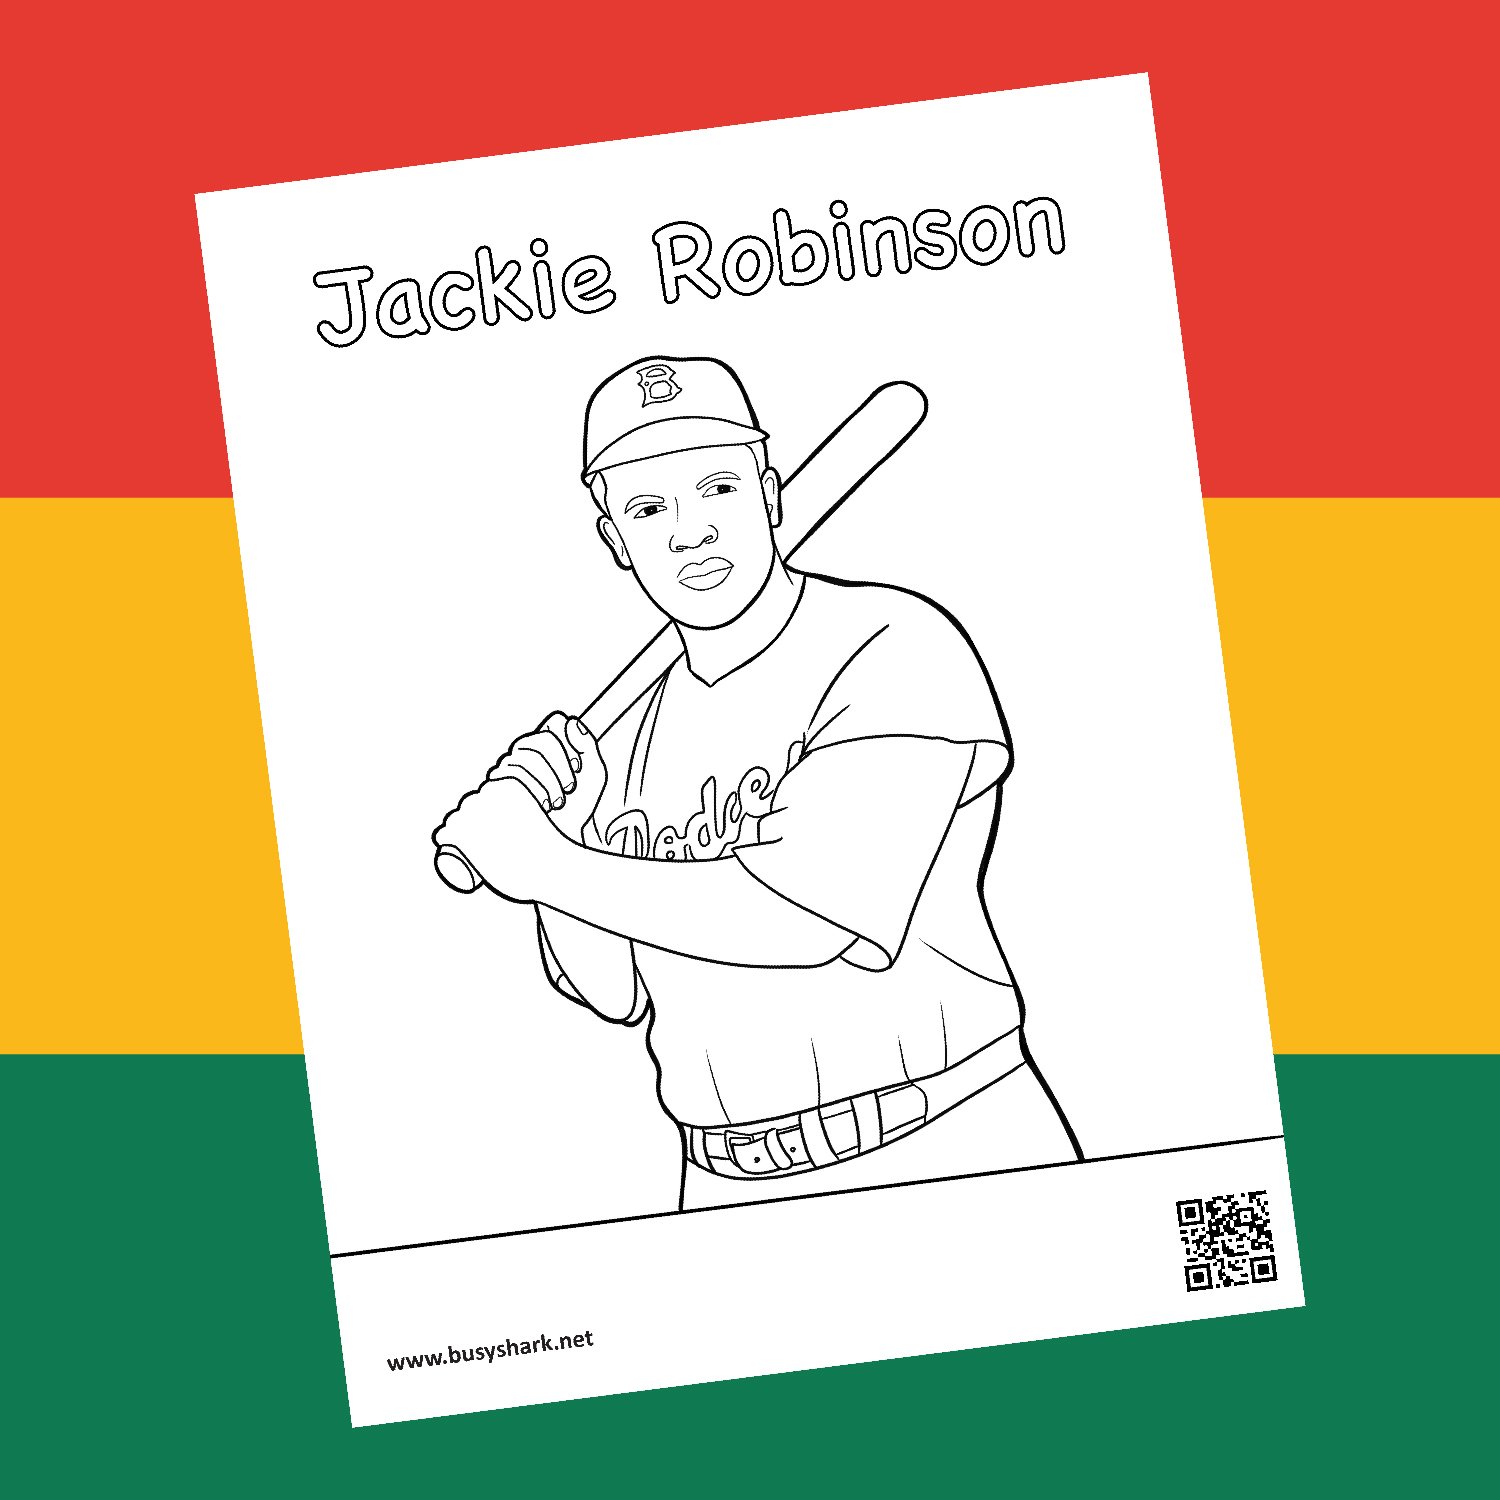 Jackie robinson coloring page free printable